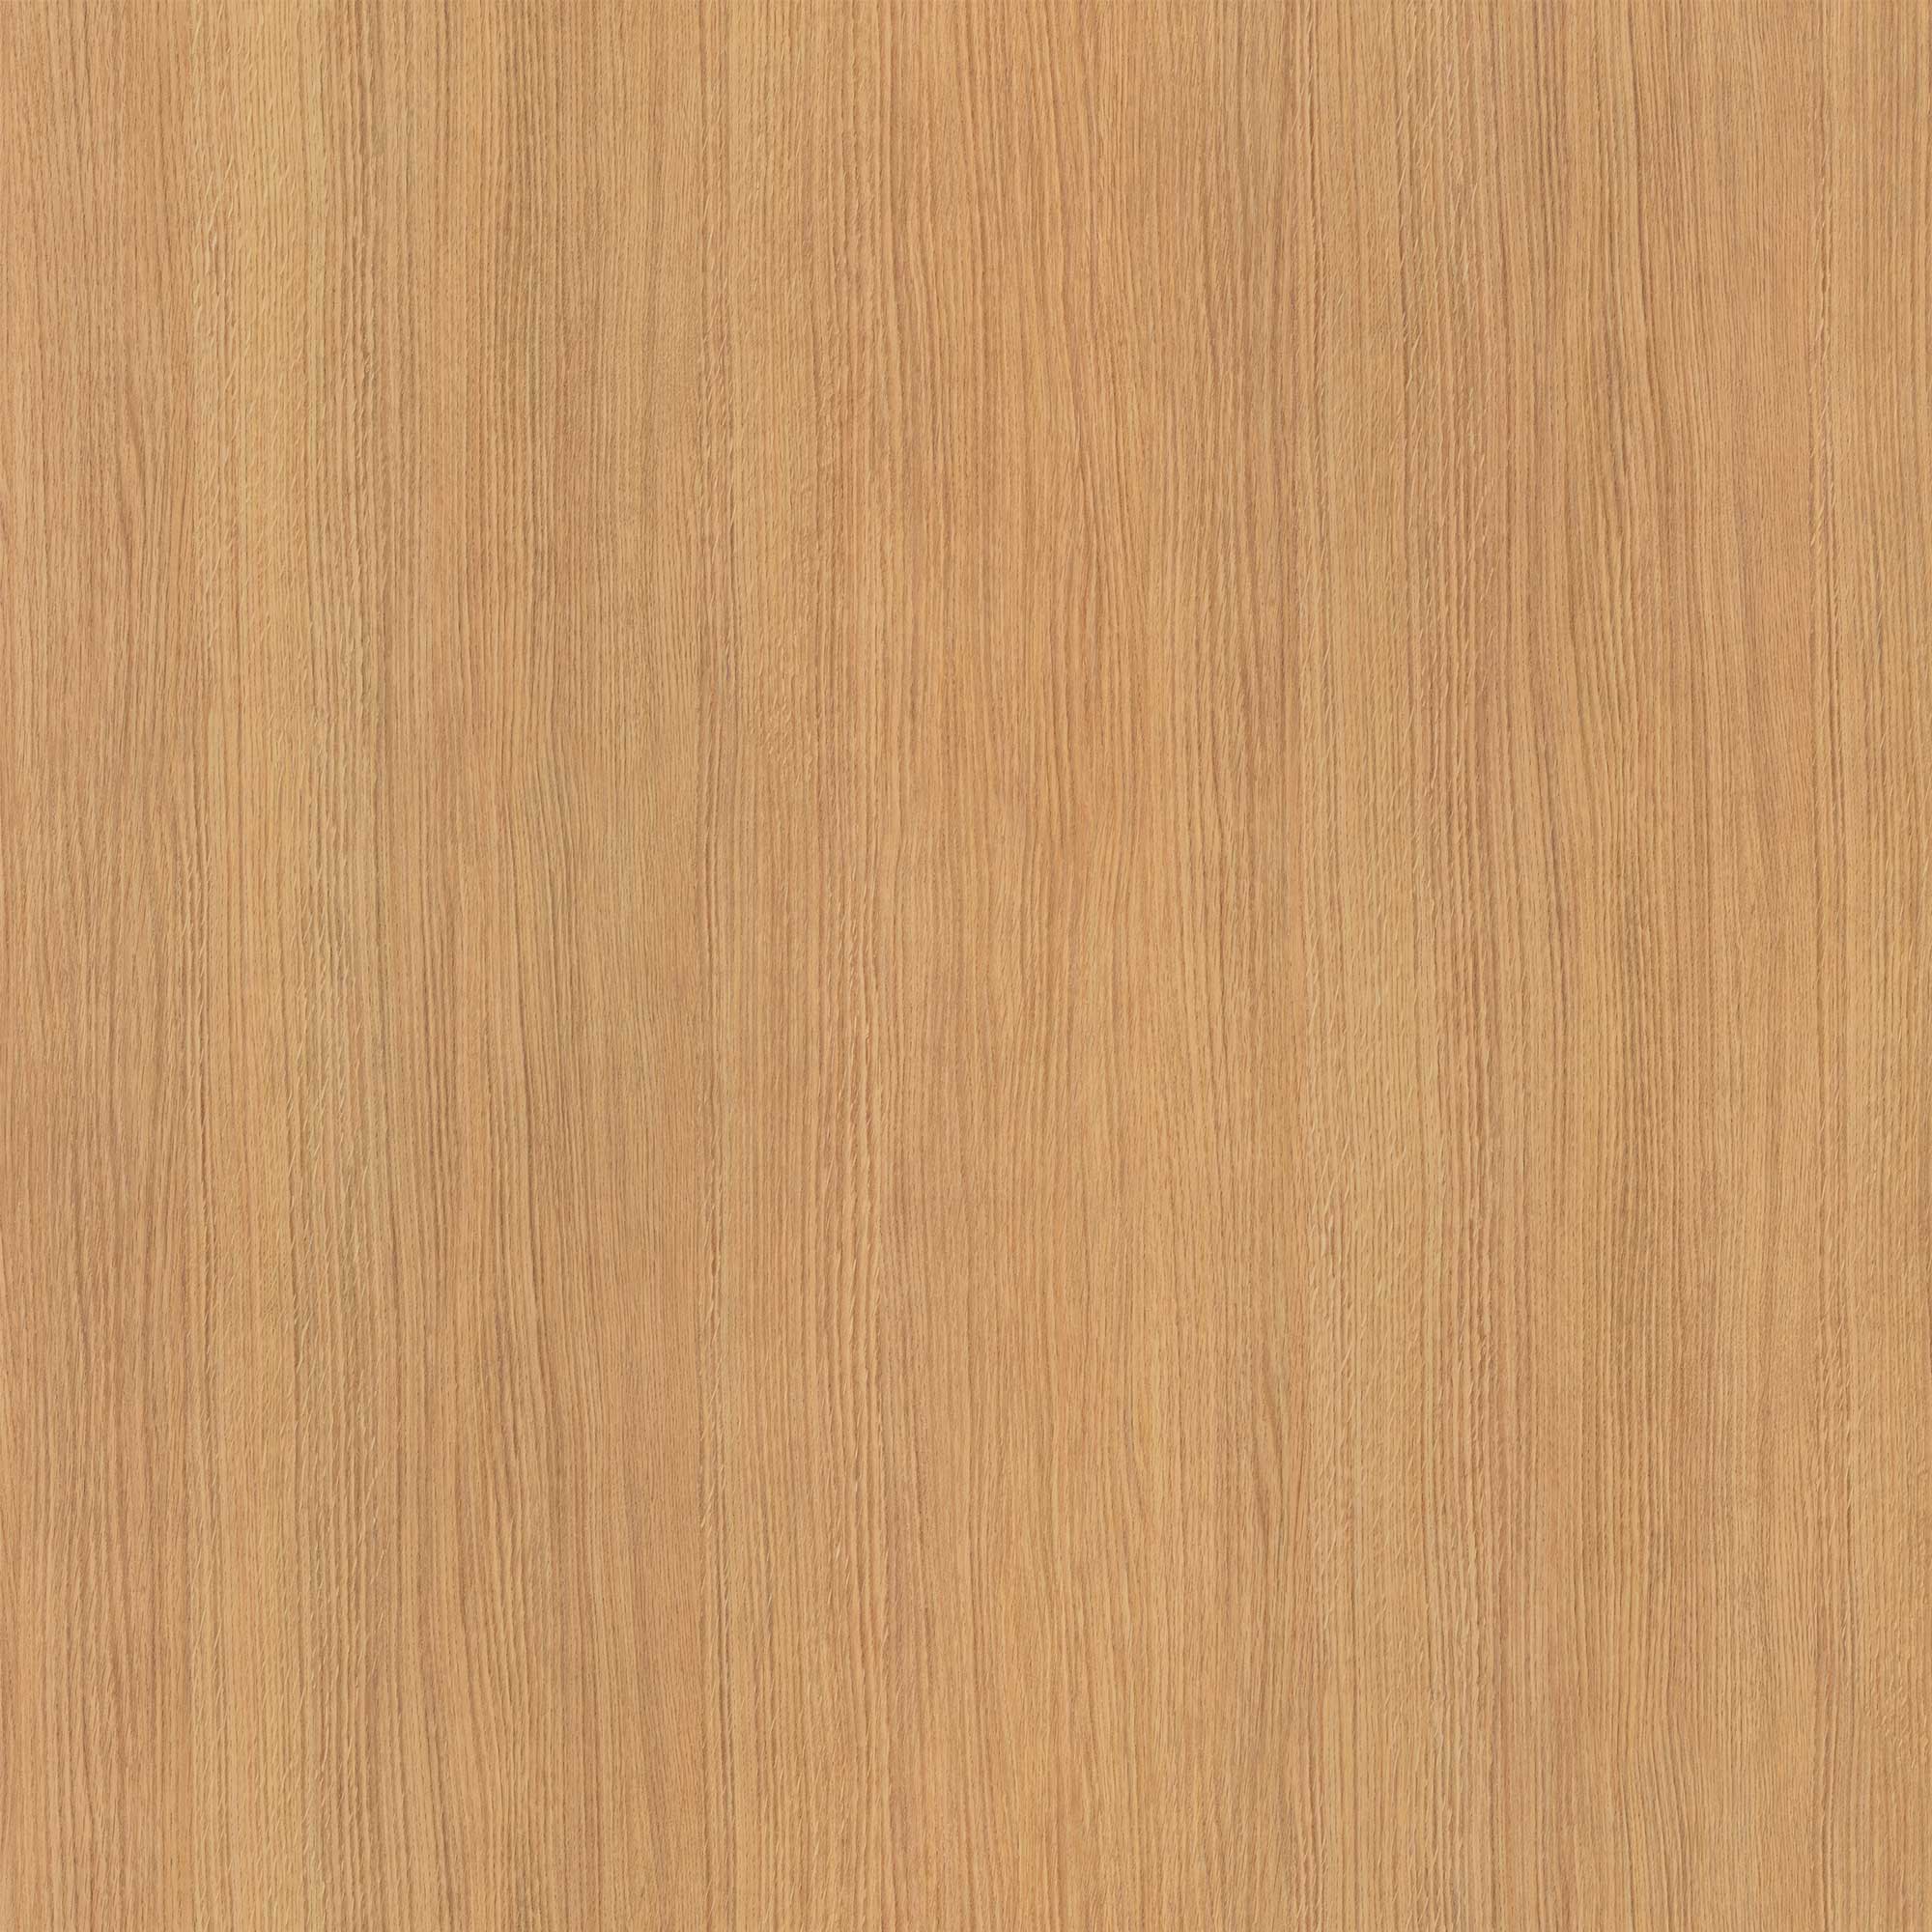 118 Finnish Oak - Formica® Laminate - Commercial